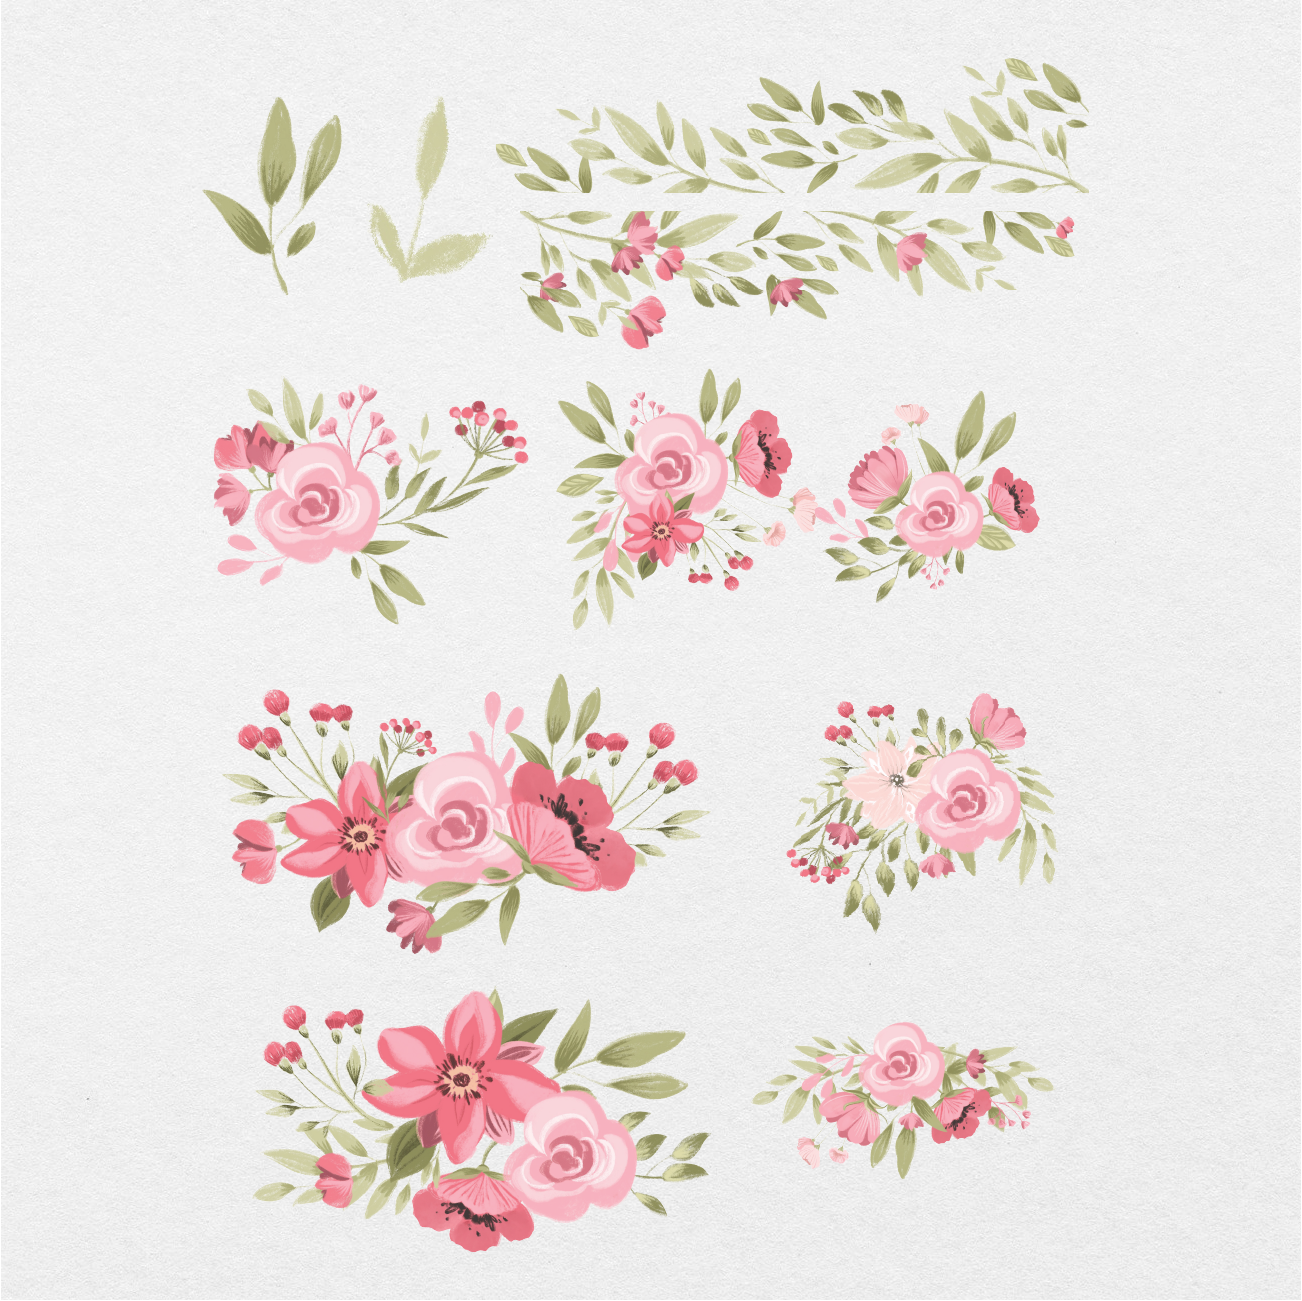 69 Digital Pink Rabbits & Flowers Sticker Bundle - Stationery Pal